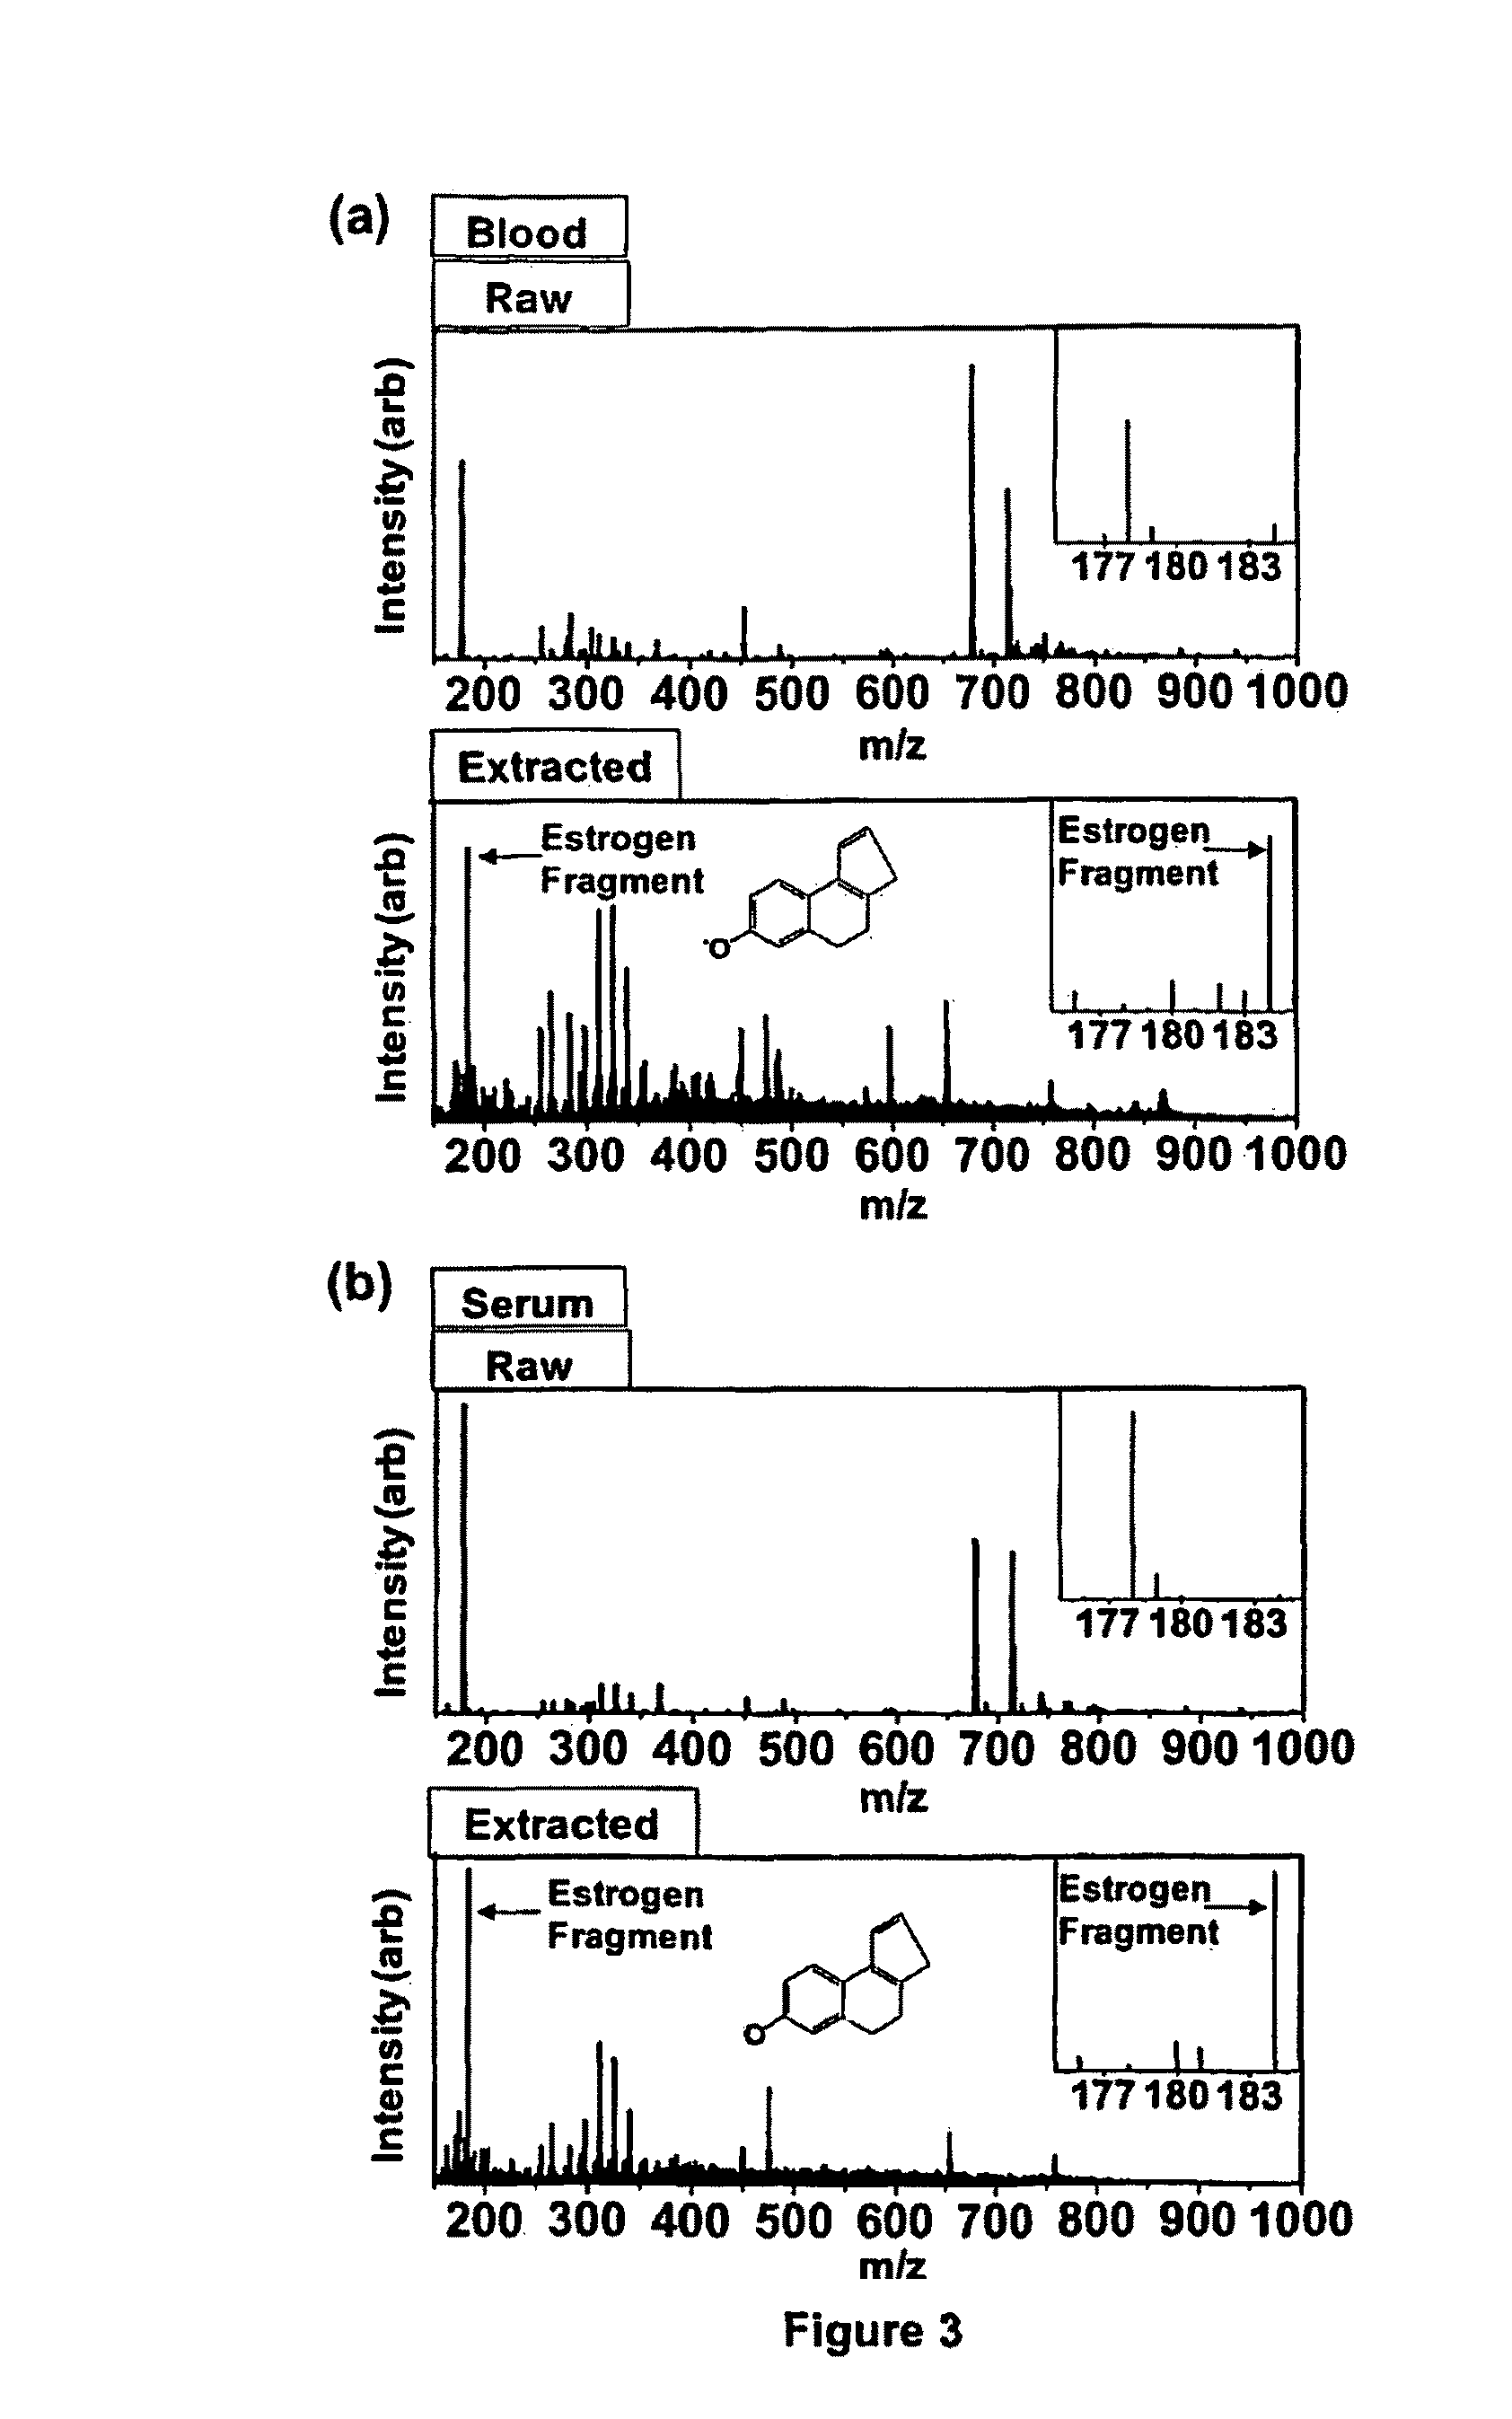 Method of hormone extraction using digital microfluidics